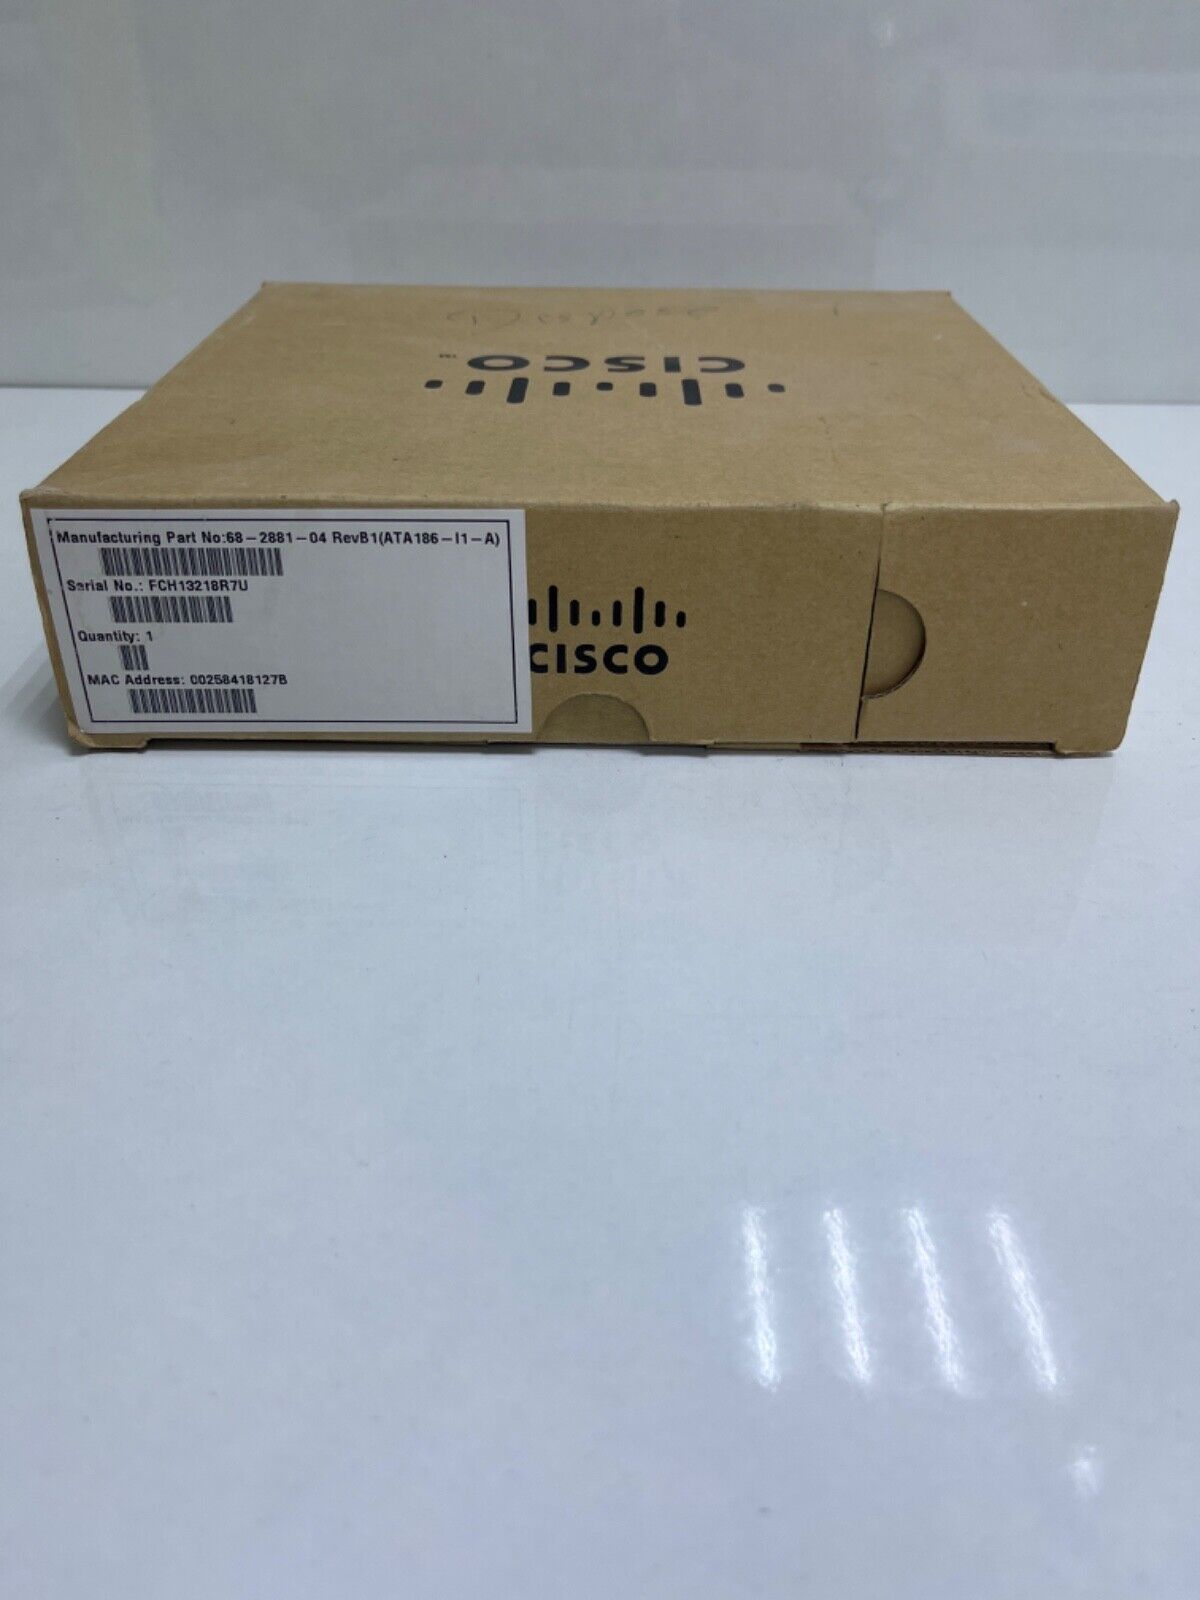 Cisco 68-2881-04 revB1 10/100 Wired Analog Telephone Adapter (ATA186-I1-A)